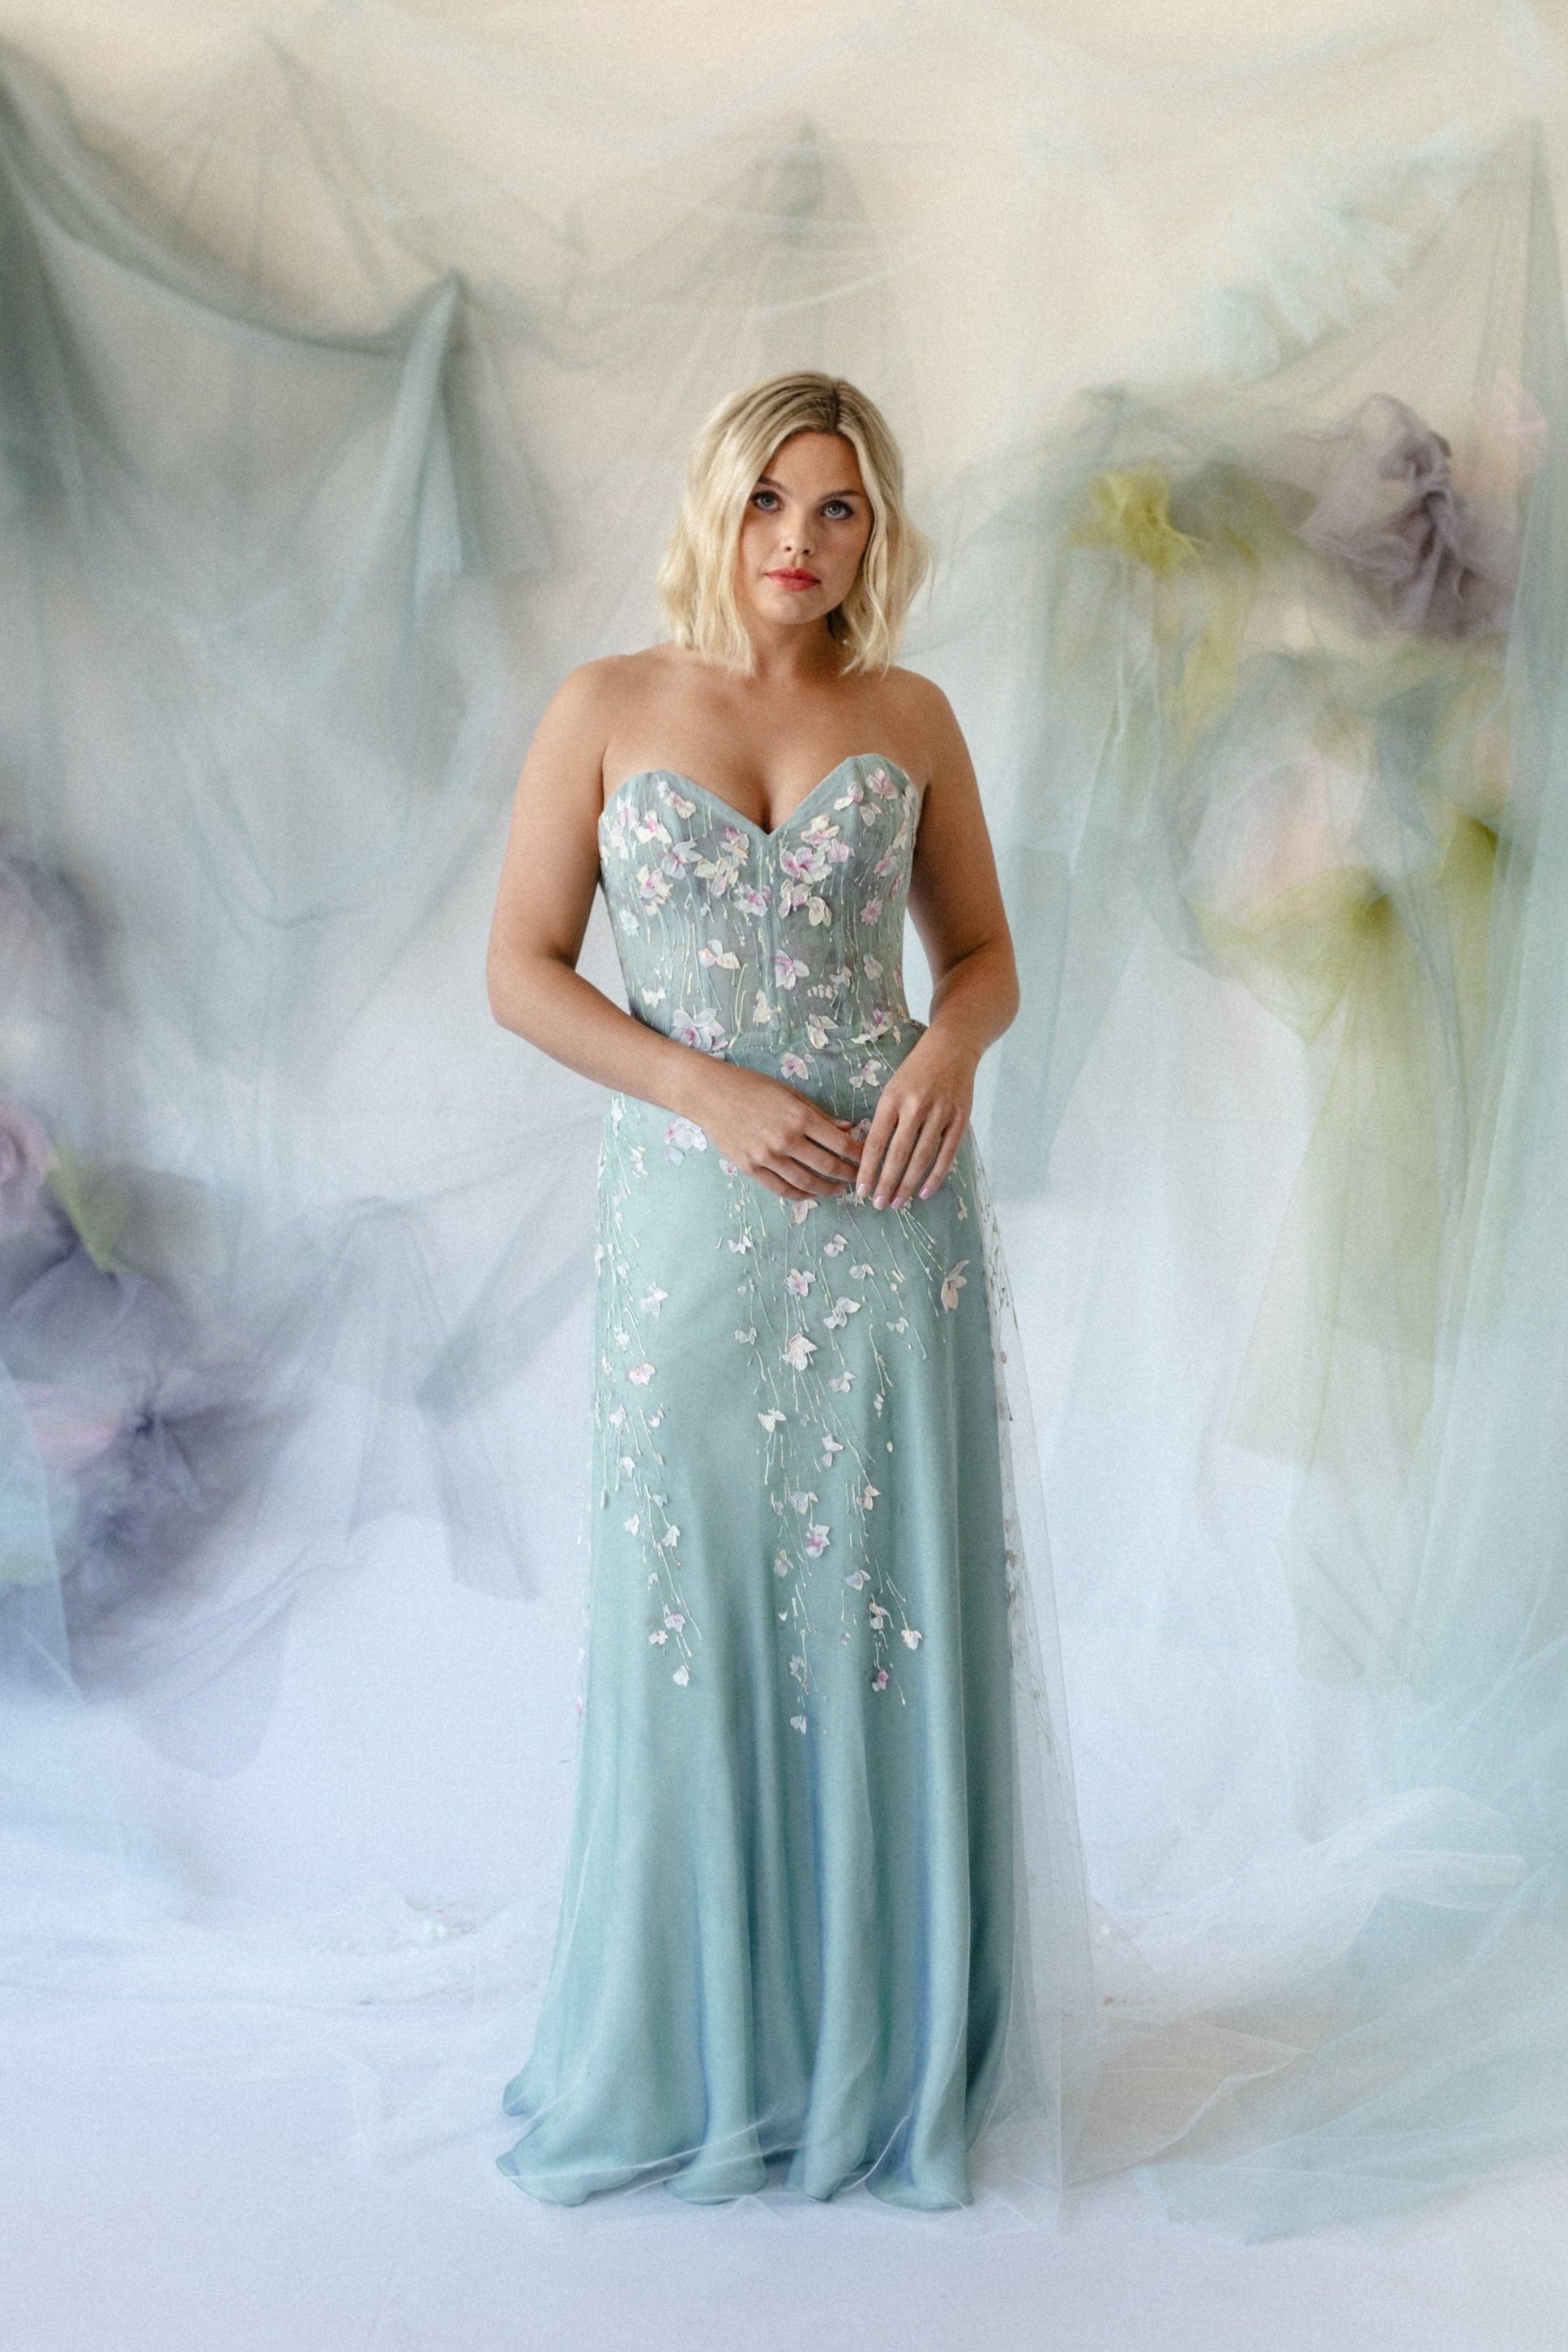 Monet+wedding+dress1.jpg